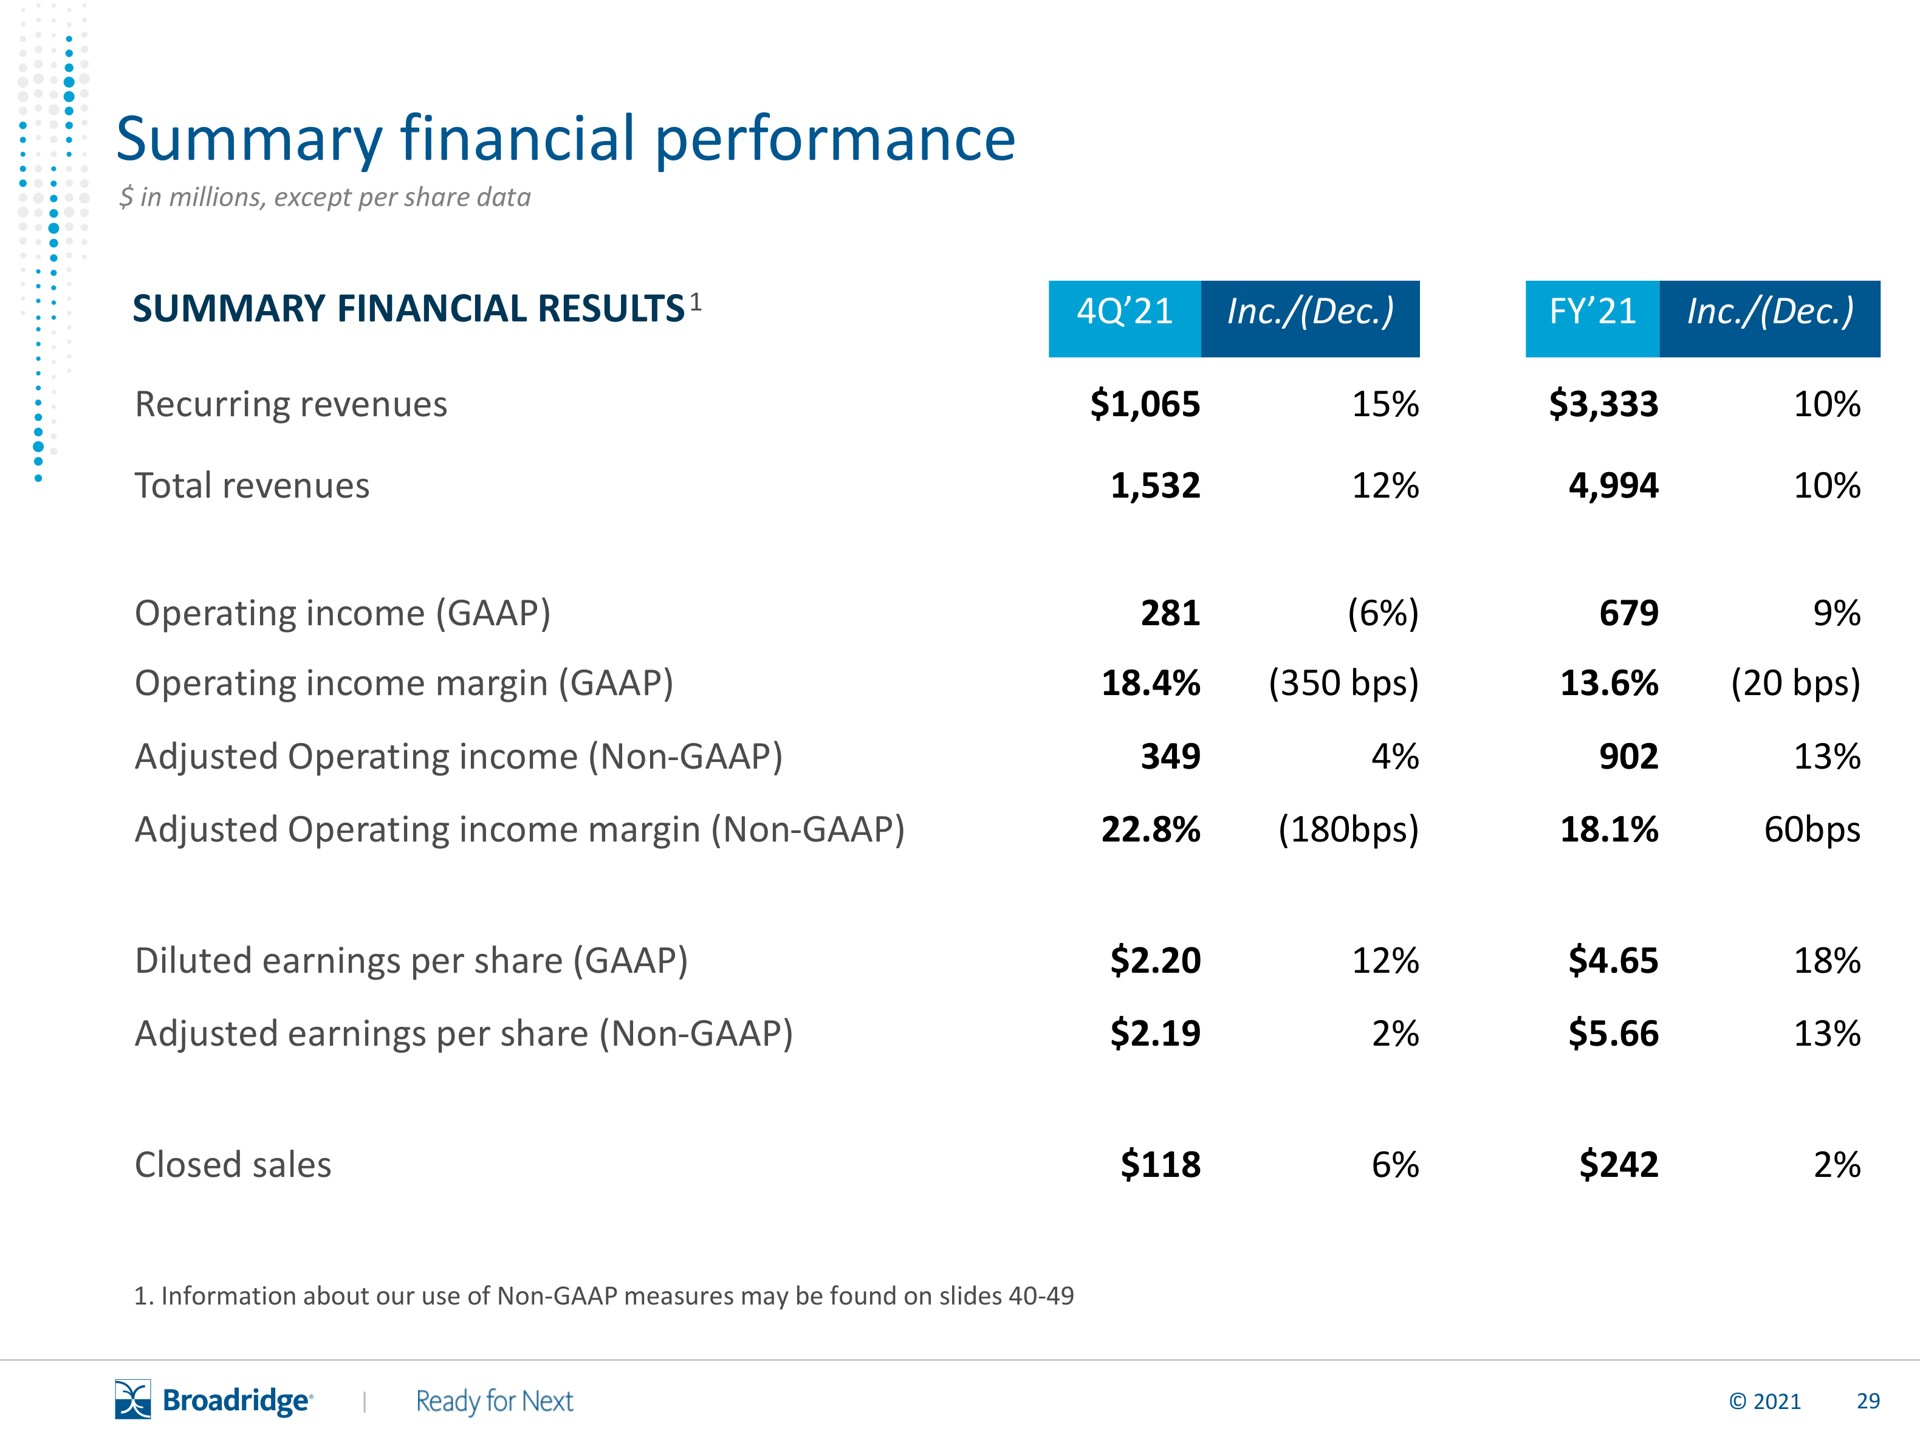 summary financial performance results | Broadridge Financial Solutions